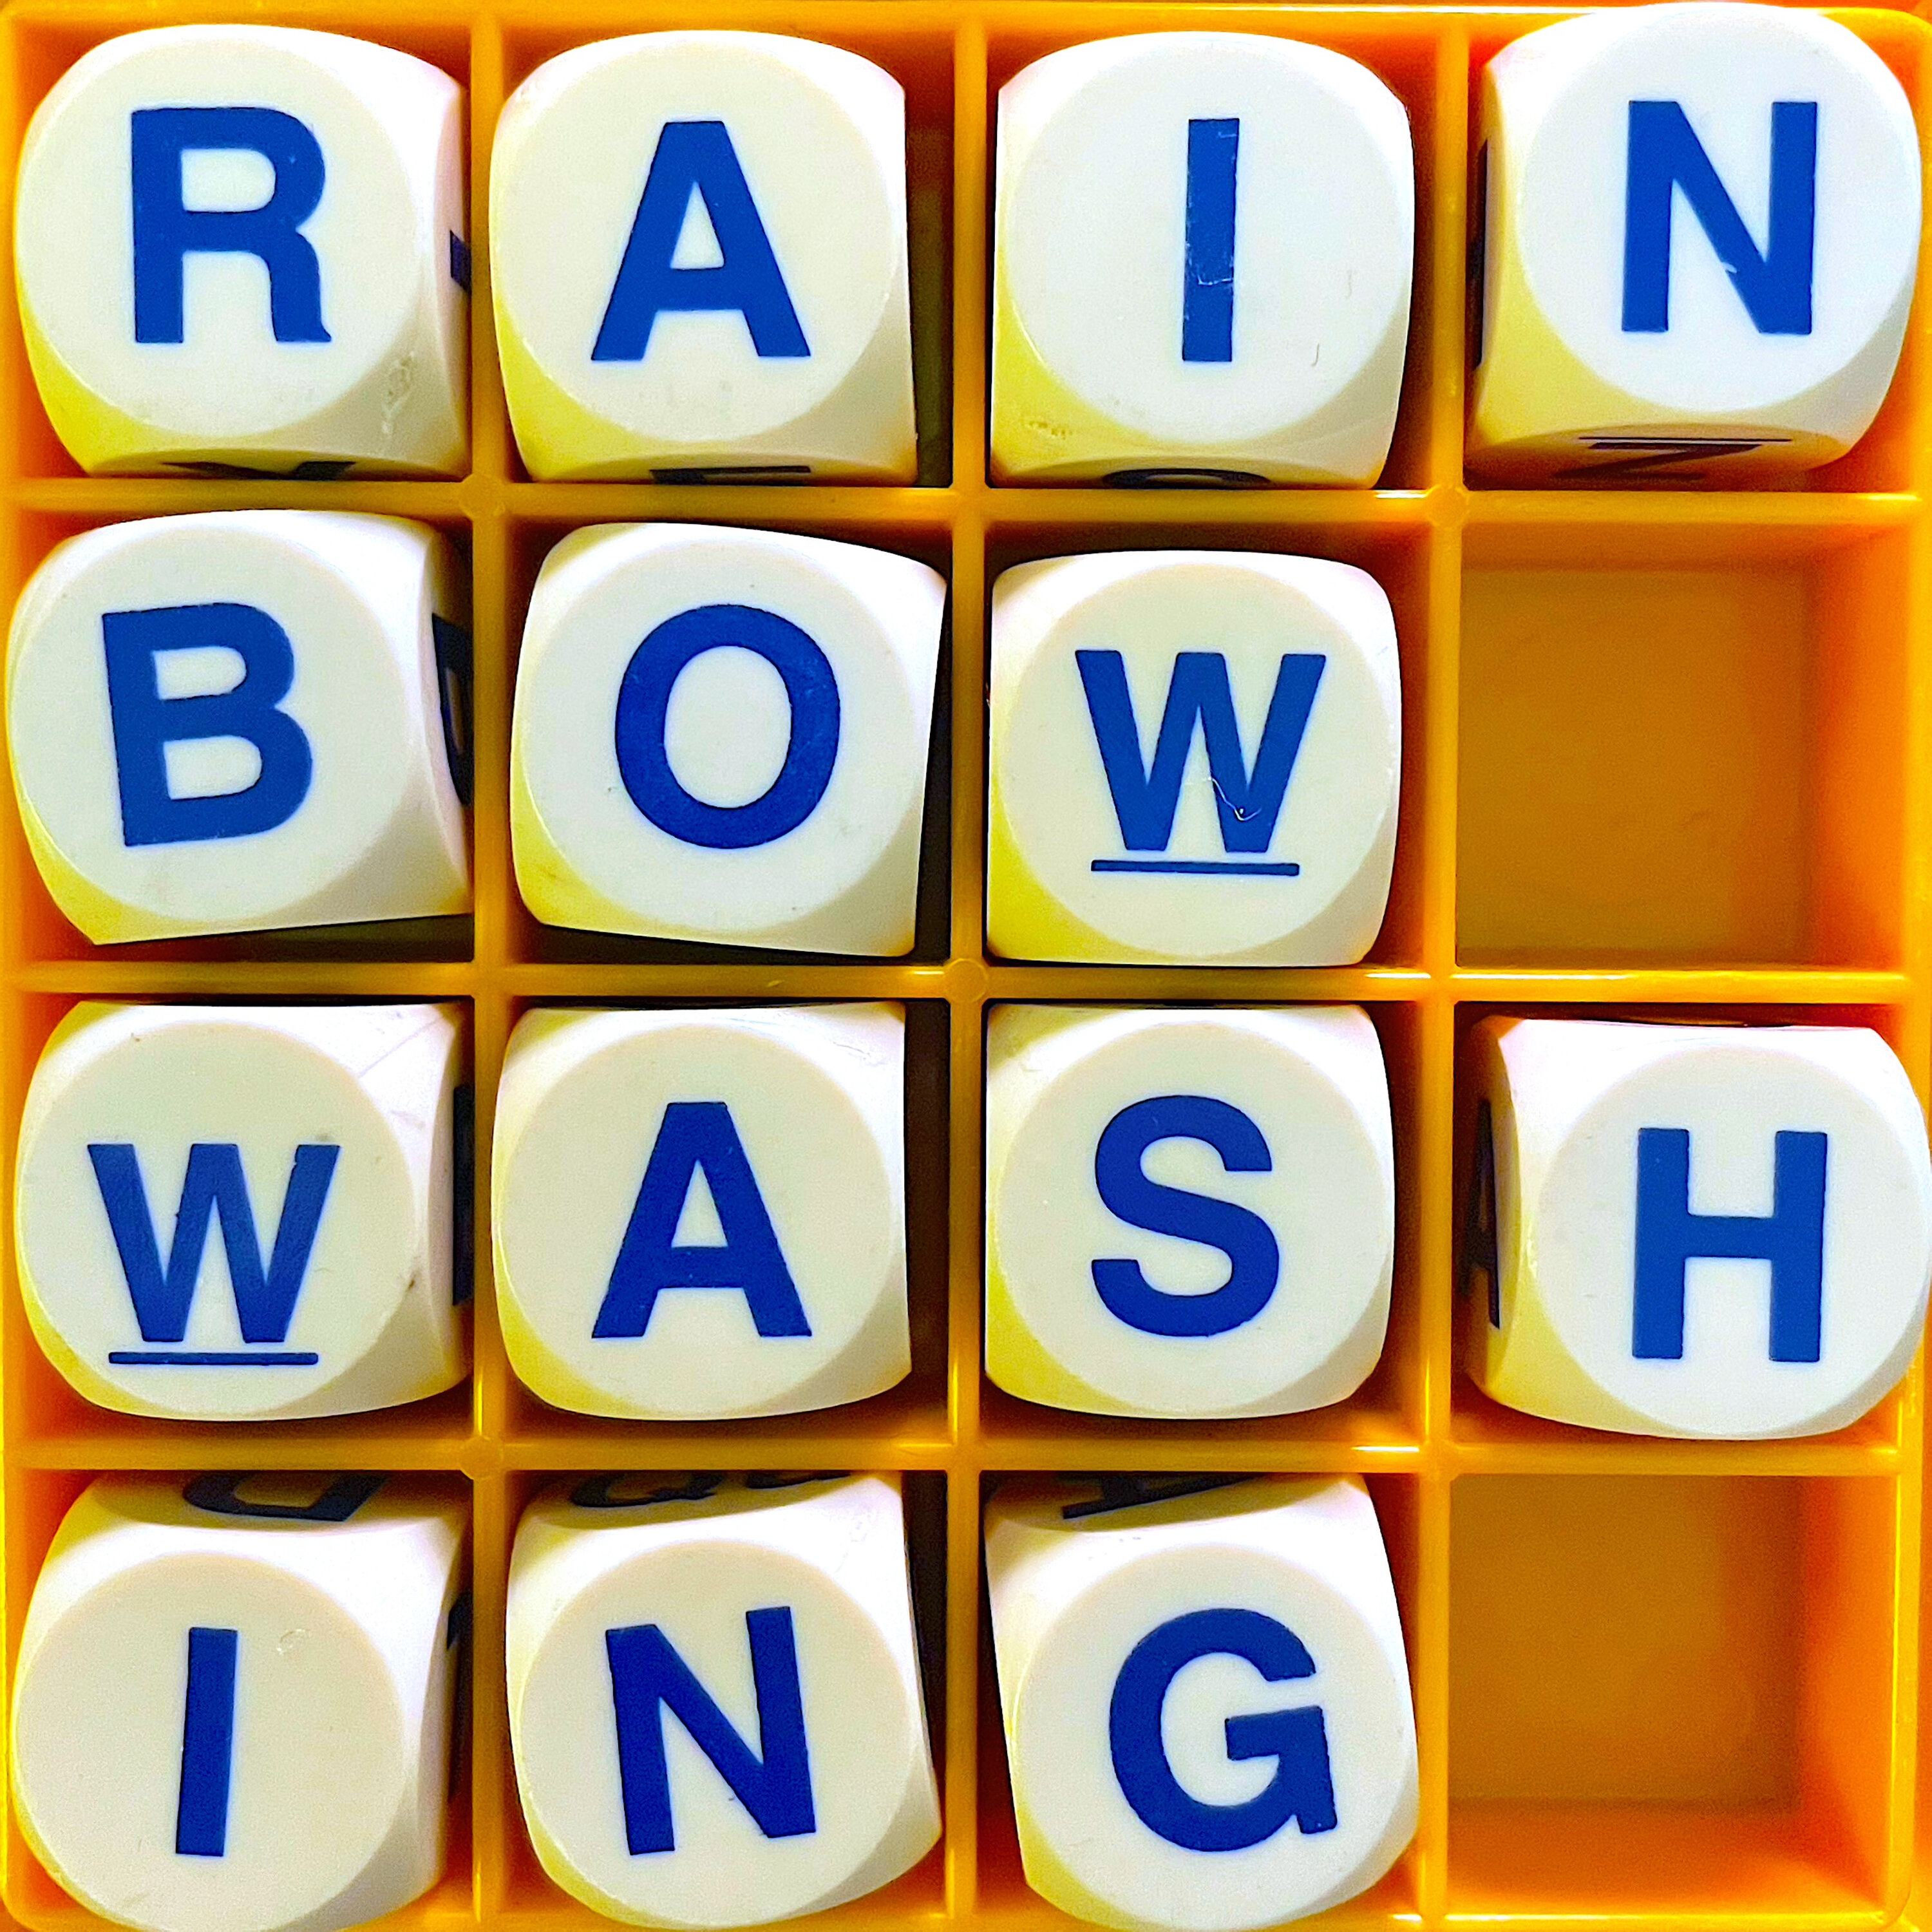 “Rainbow Washing” During Pride Month